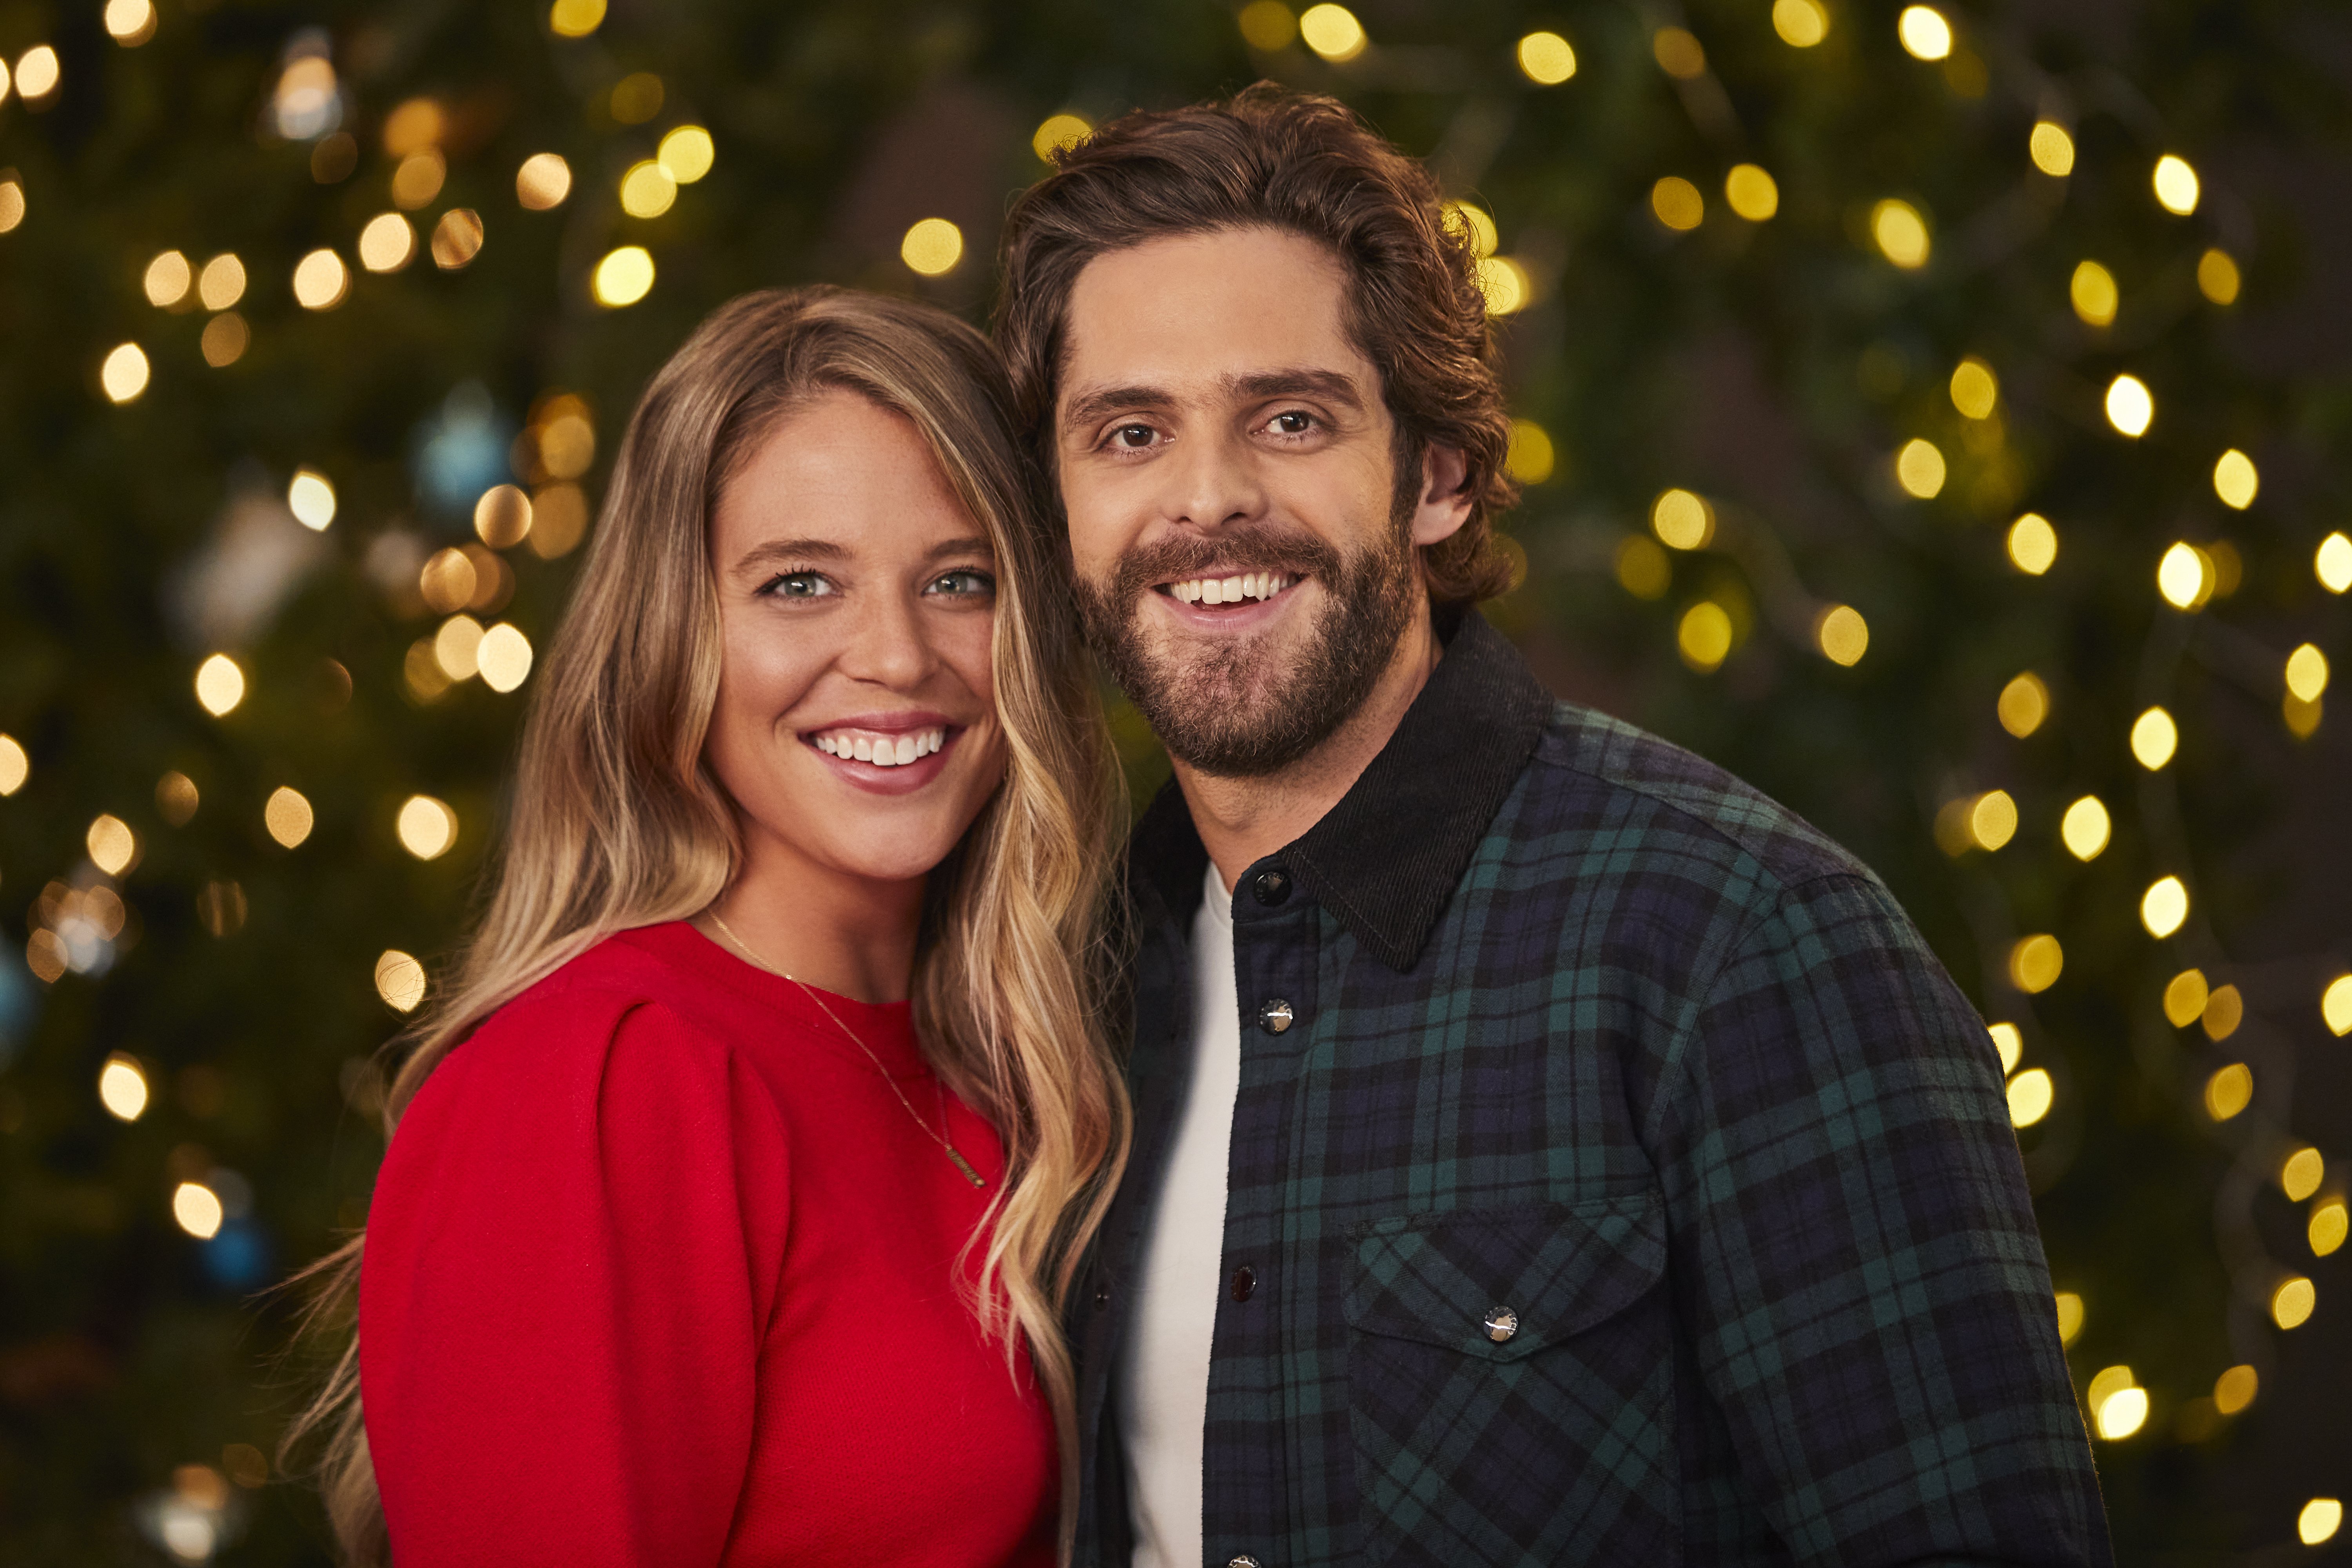 ABC's "CMA Country Christmas" stars Lauren Akins and Thomas Rhett. | Source: Getty Images